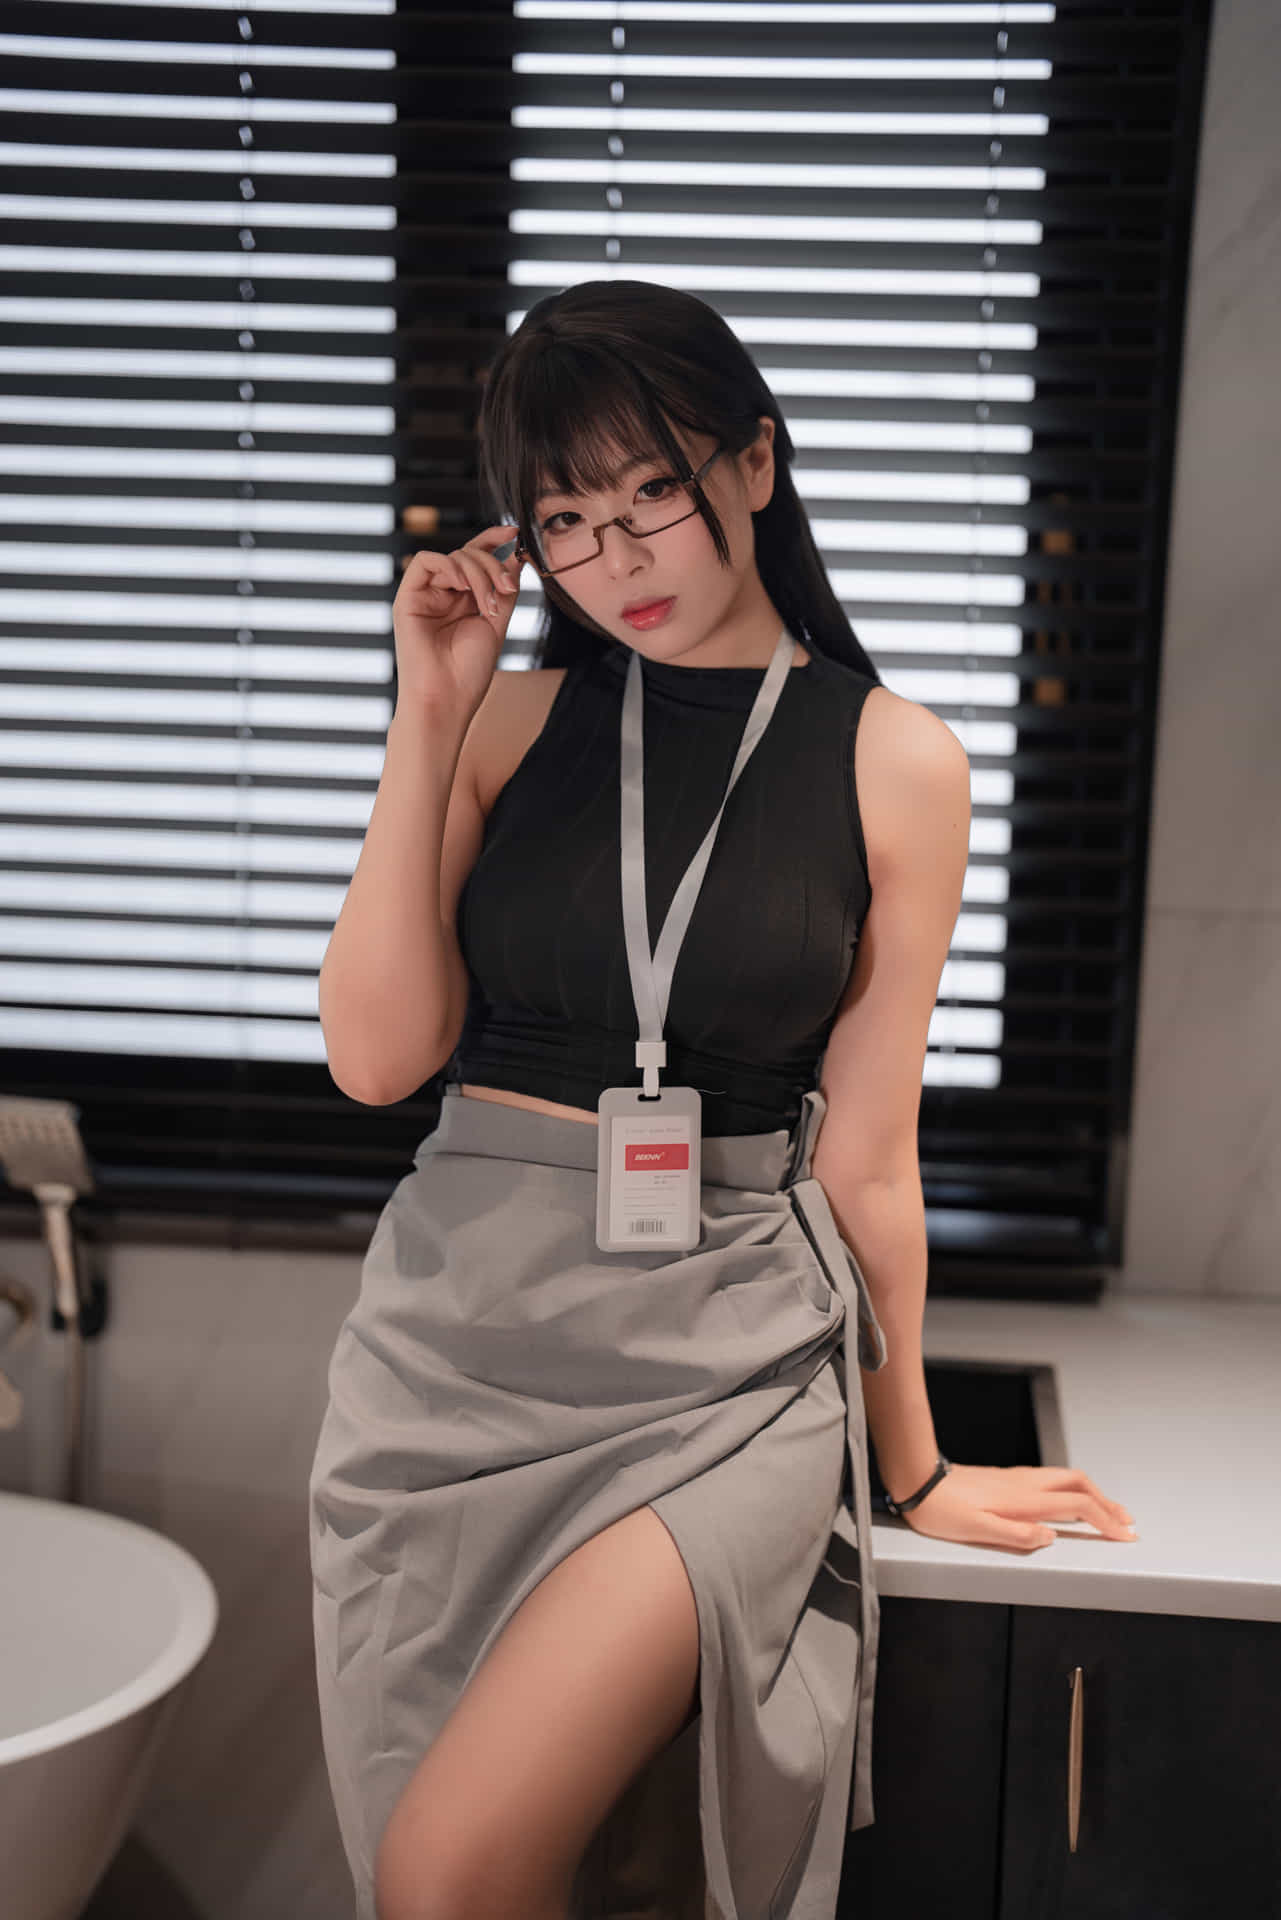 Xuan Xiao 언니 - 안경 소녀 OL